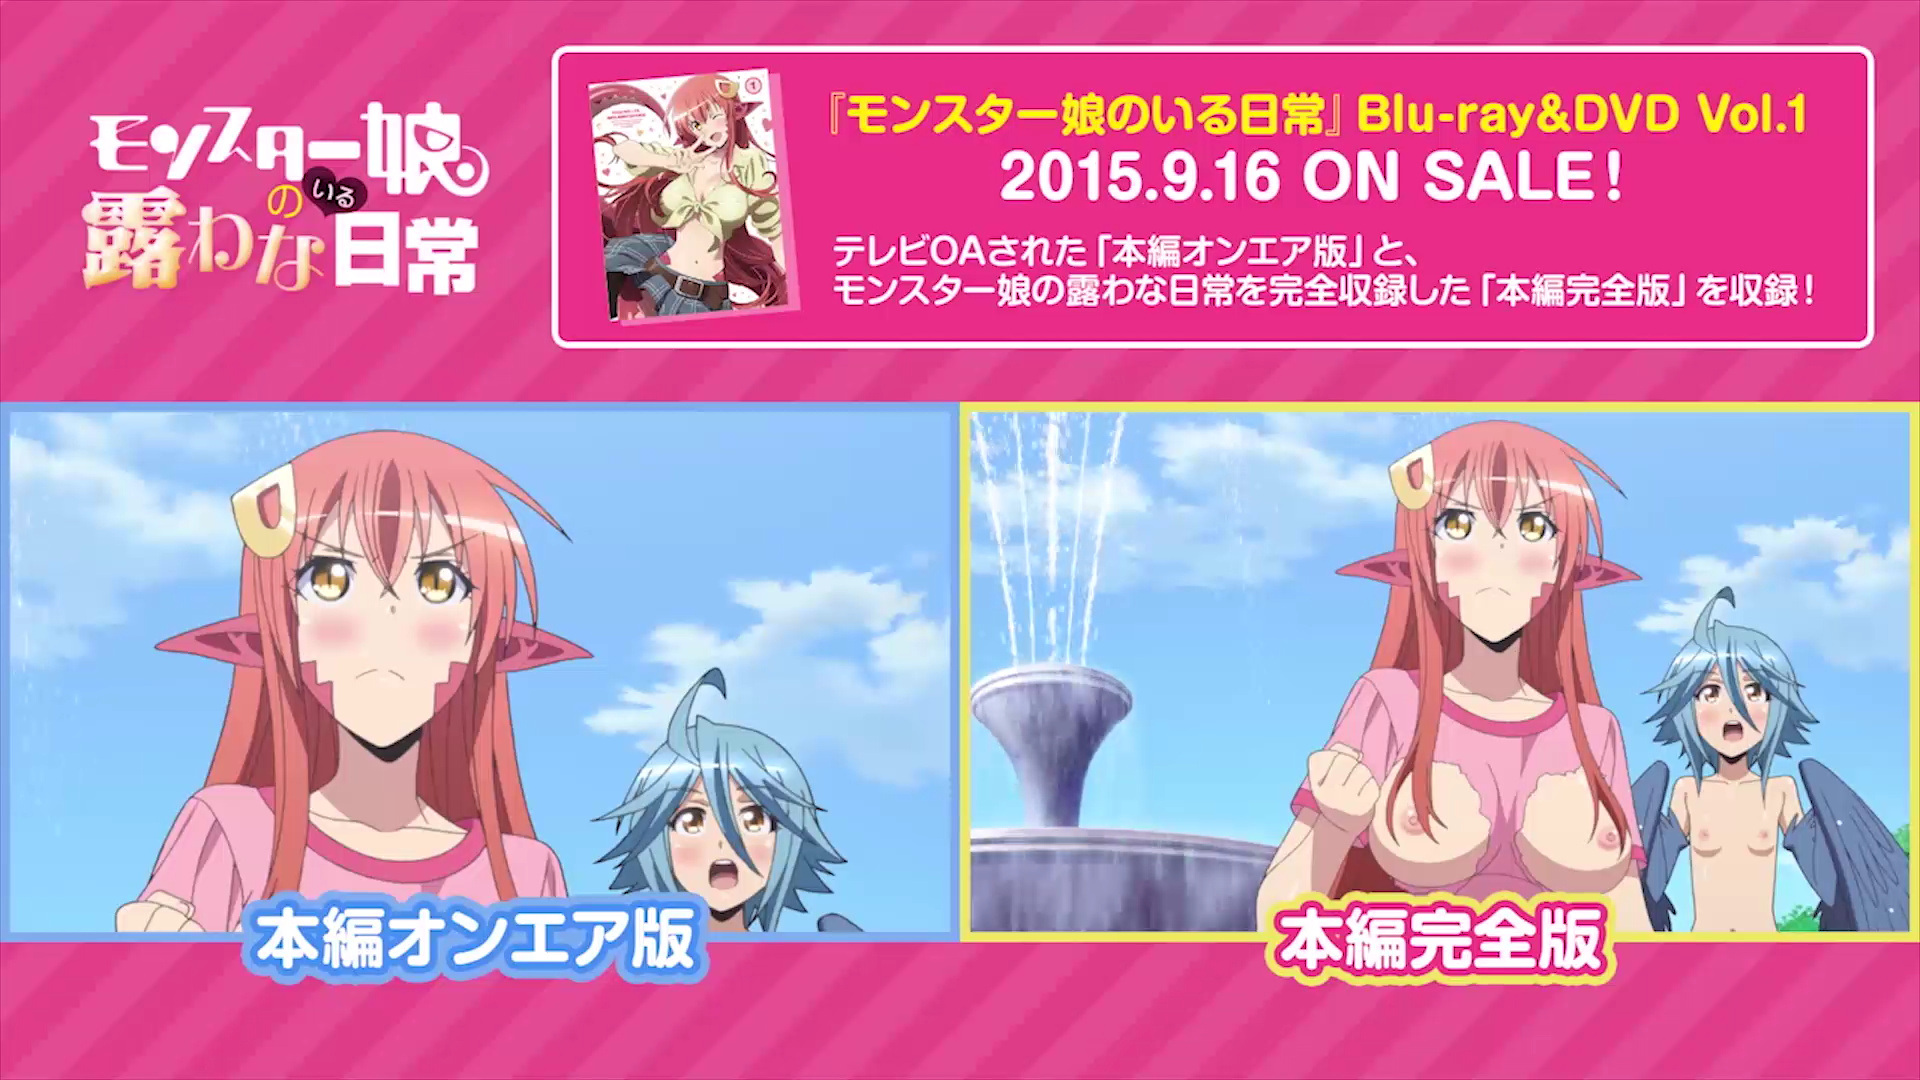 TV vs Blu-Ray Monster Musume anime blu-ray volume 1 uncensored 3